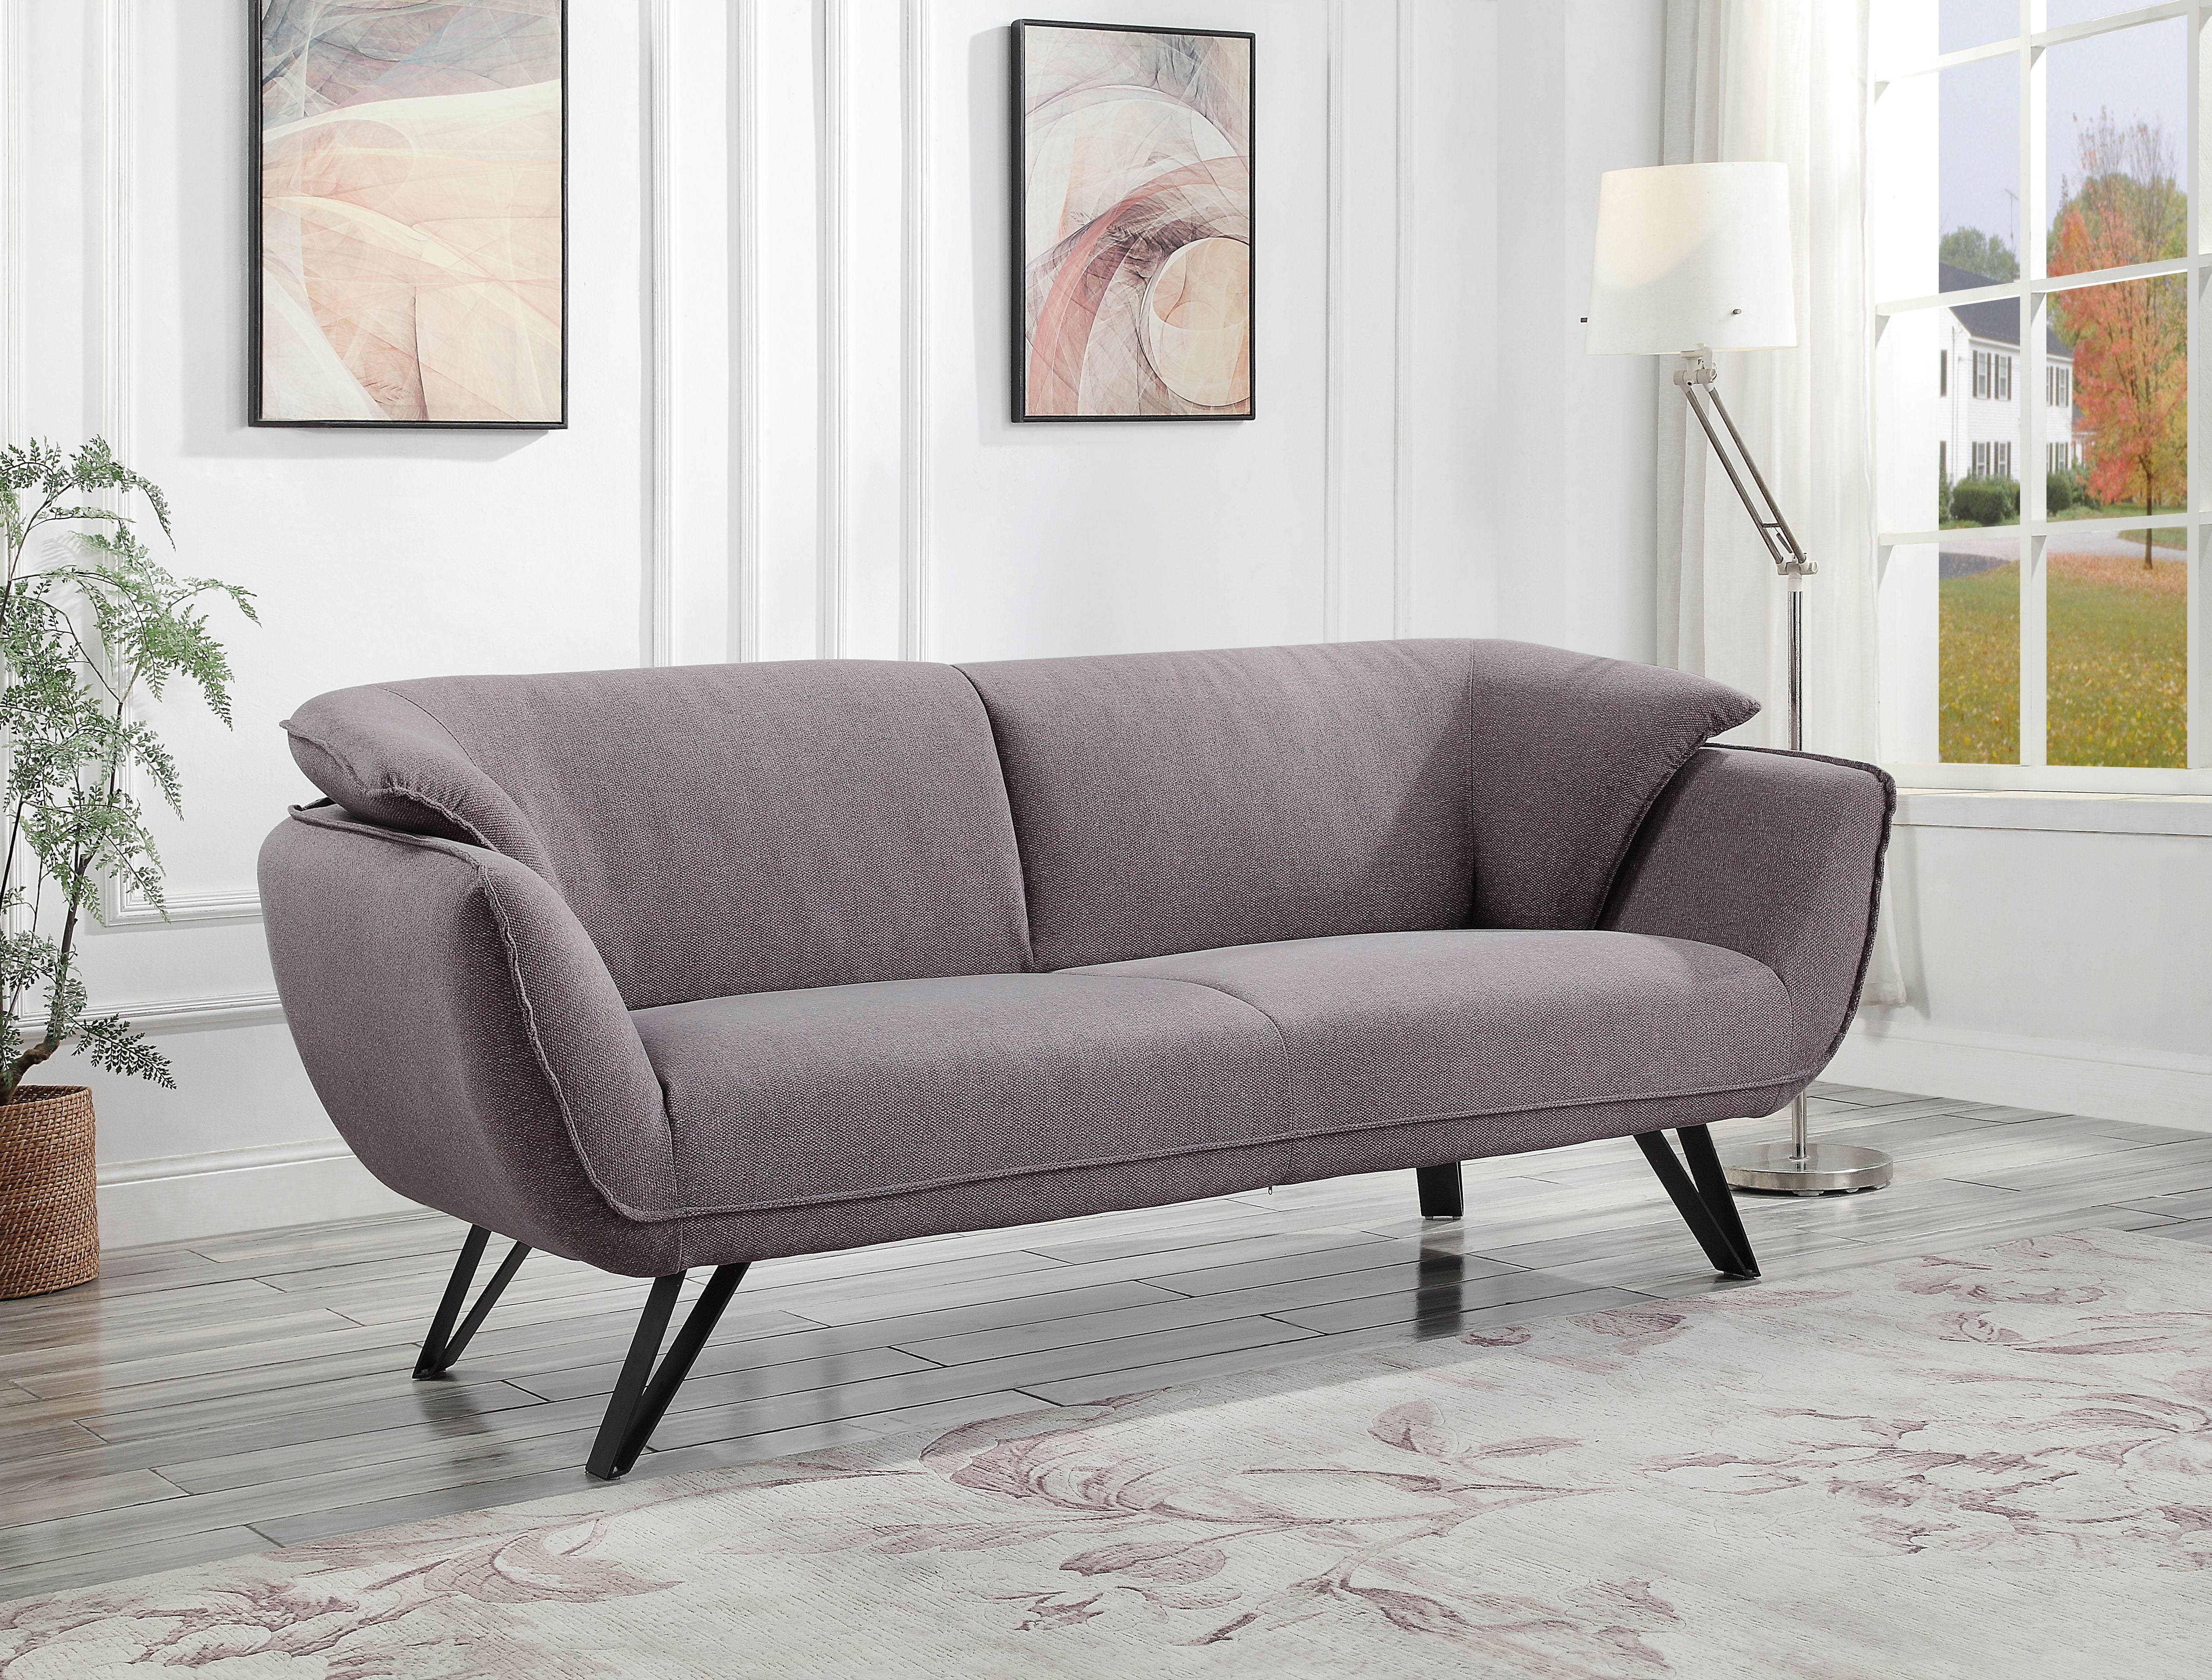 ACME Furniture Sofas & Couches - ACME Dalya Sofa, Gray Linen